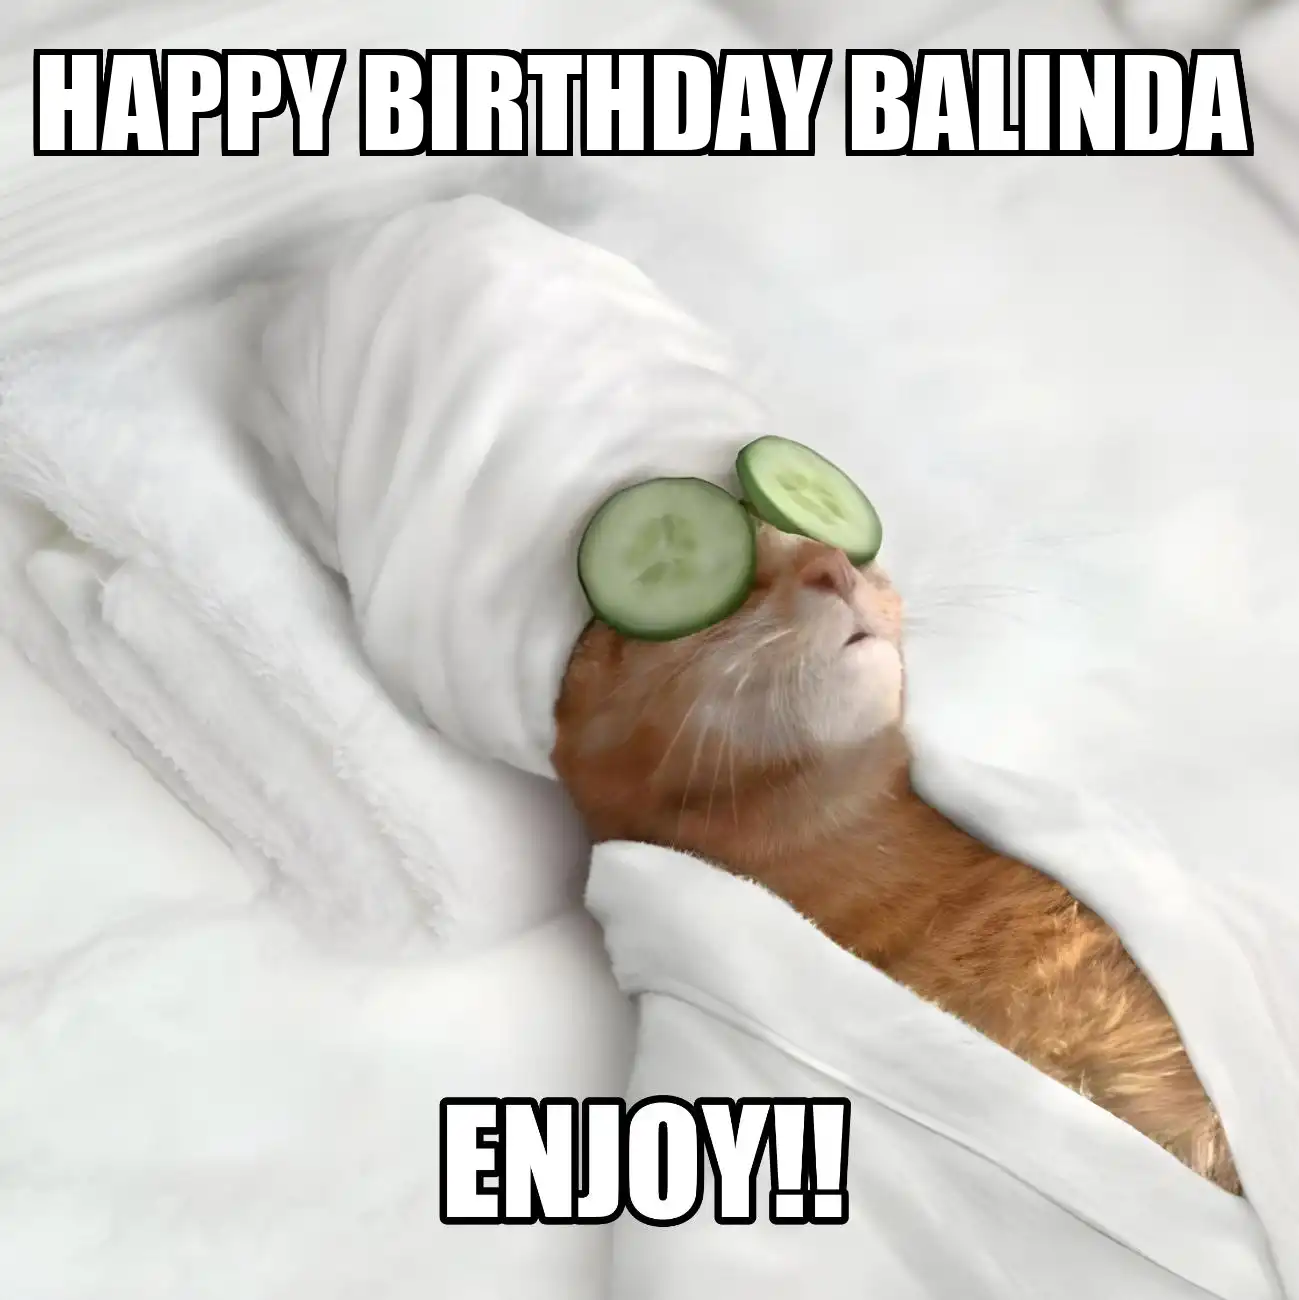 Happy Birthday Balinda Enjoy Cat Meme